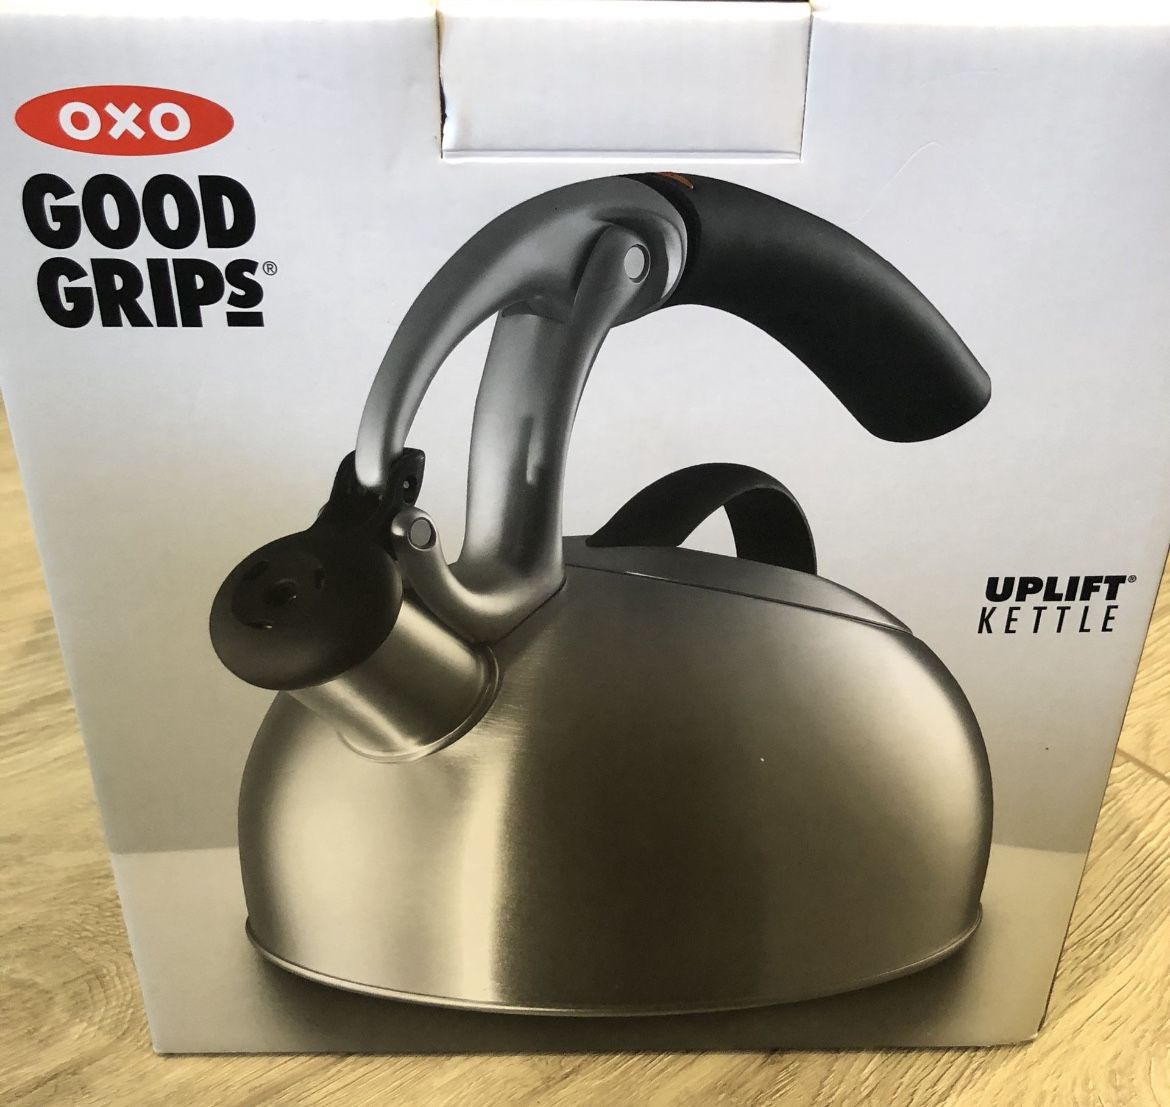 OXO Good Grips Uplift Kettle, Tea Kettle, Water Heater Boiler